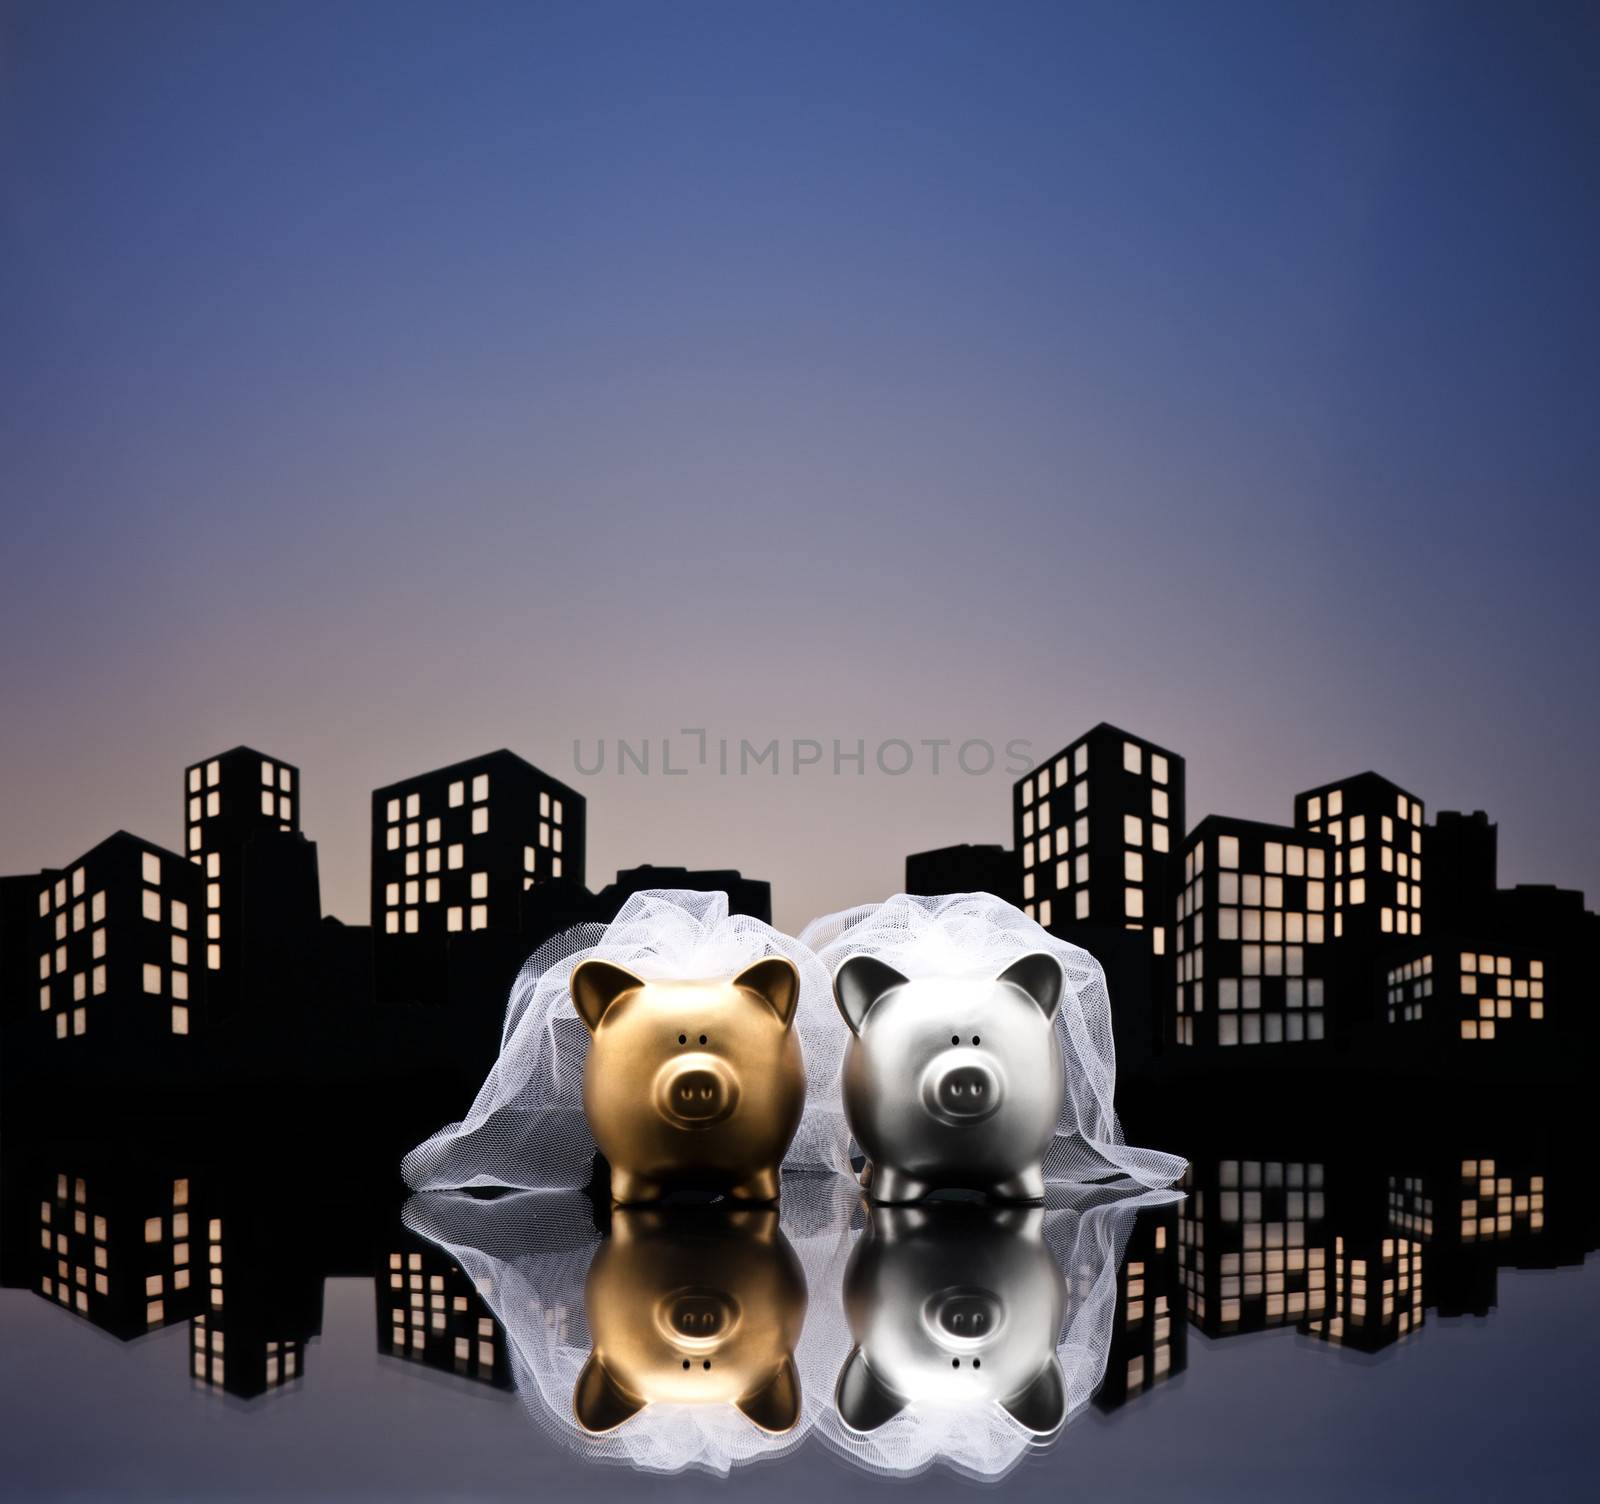 Metropolis City lesbian piggy bank civil union by 3523Studio